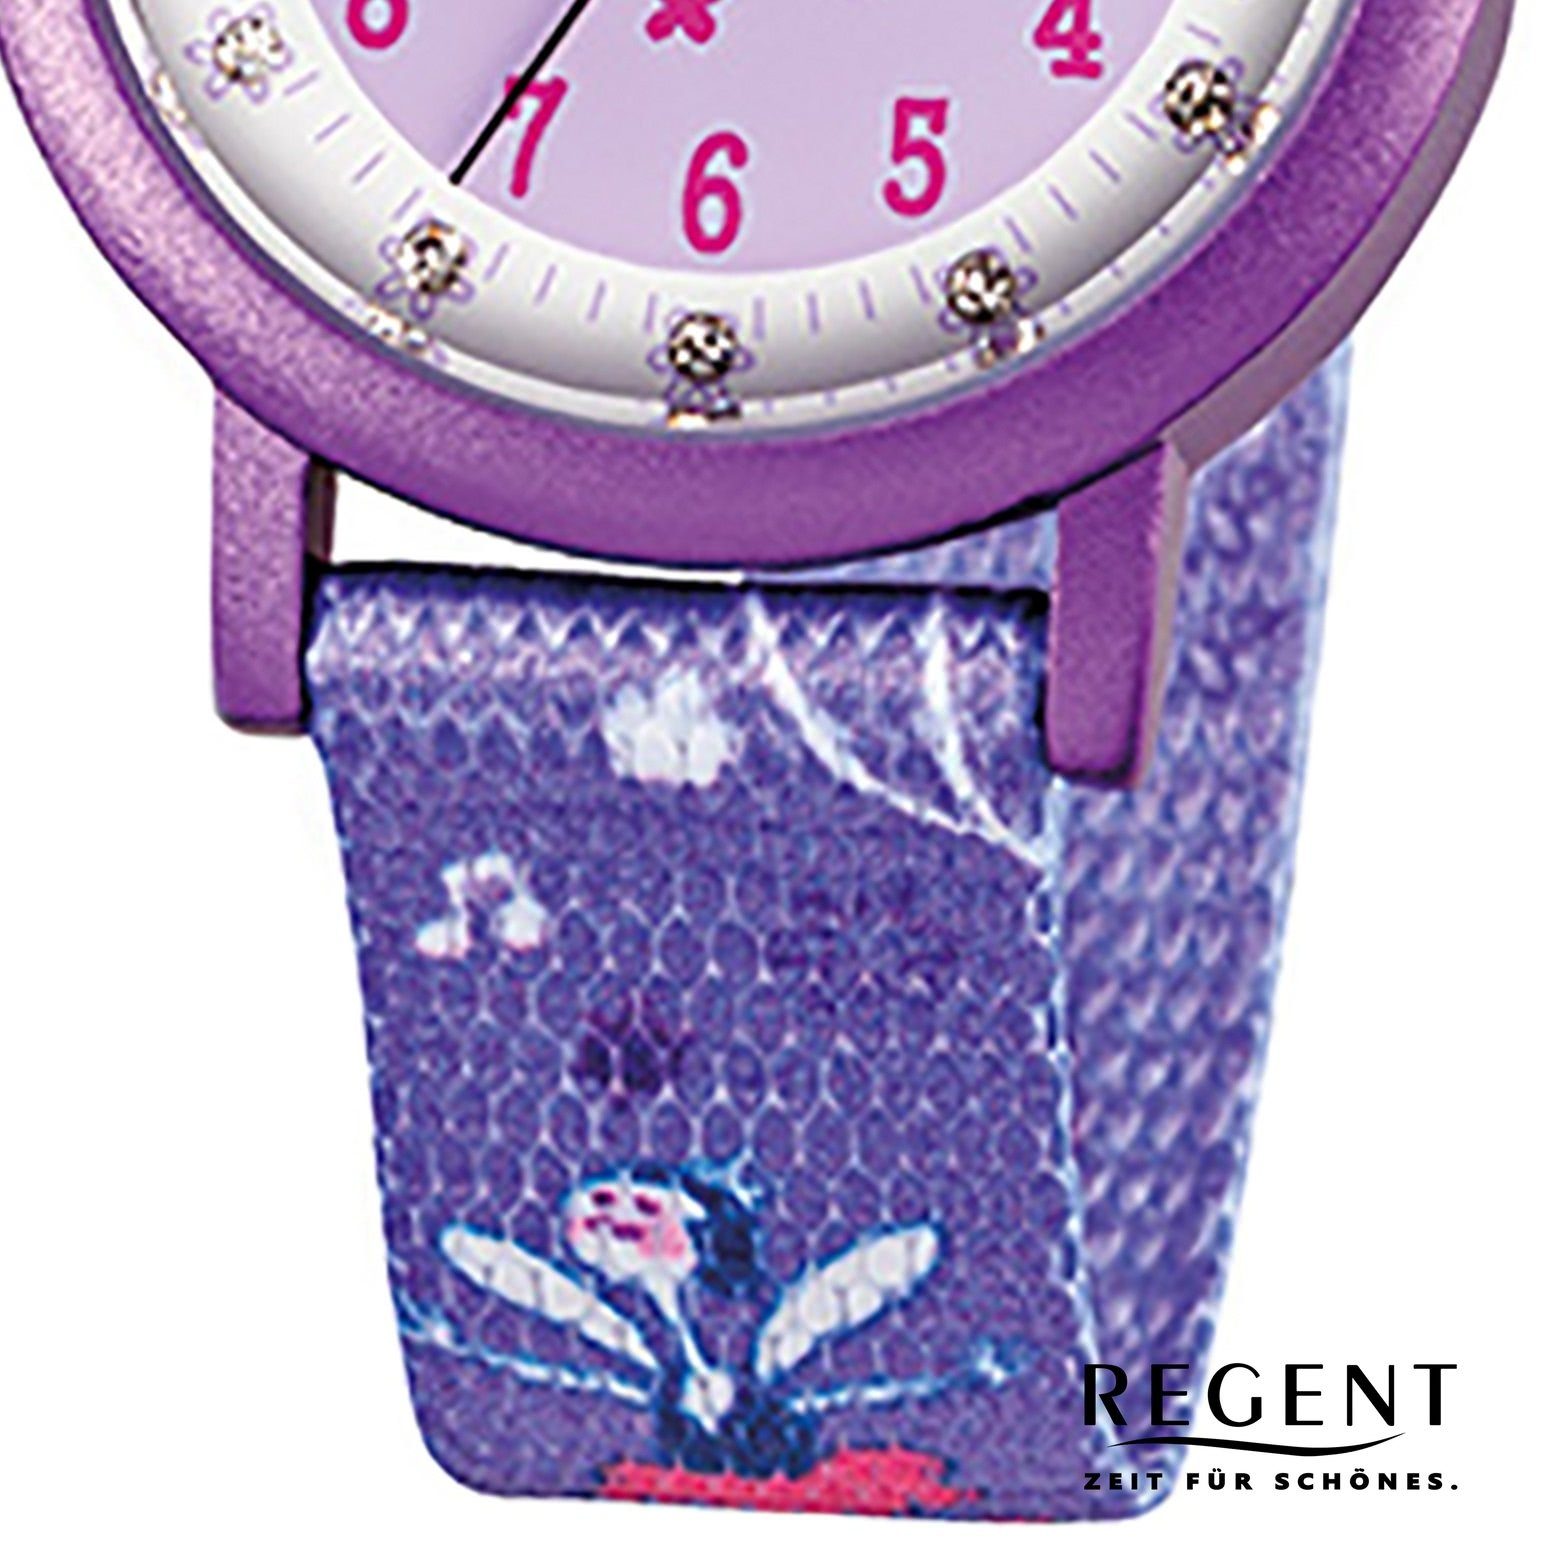 klein rund, Quarzuhr Regent F-486, (ca. Analog Regent 29mm), Kinder Armbanduhr lila Textilarmband Kinder-Armbanduhr